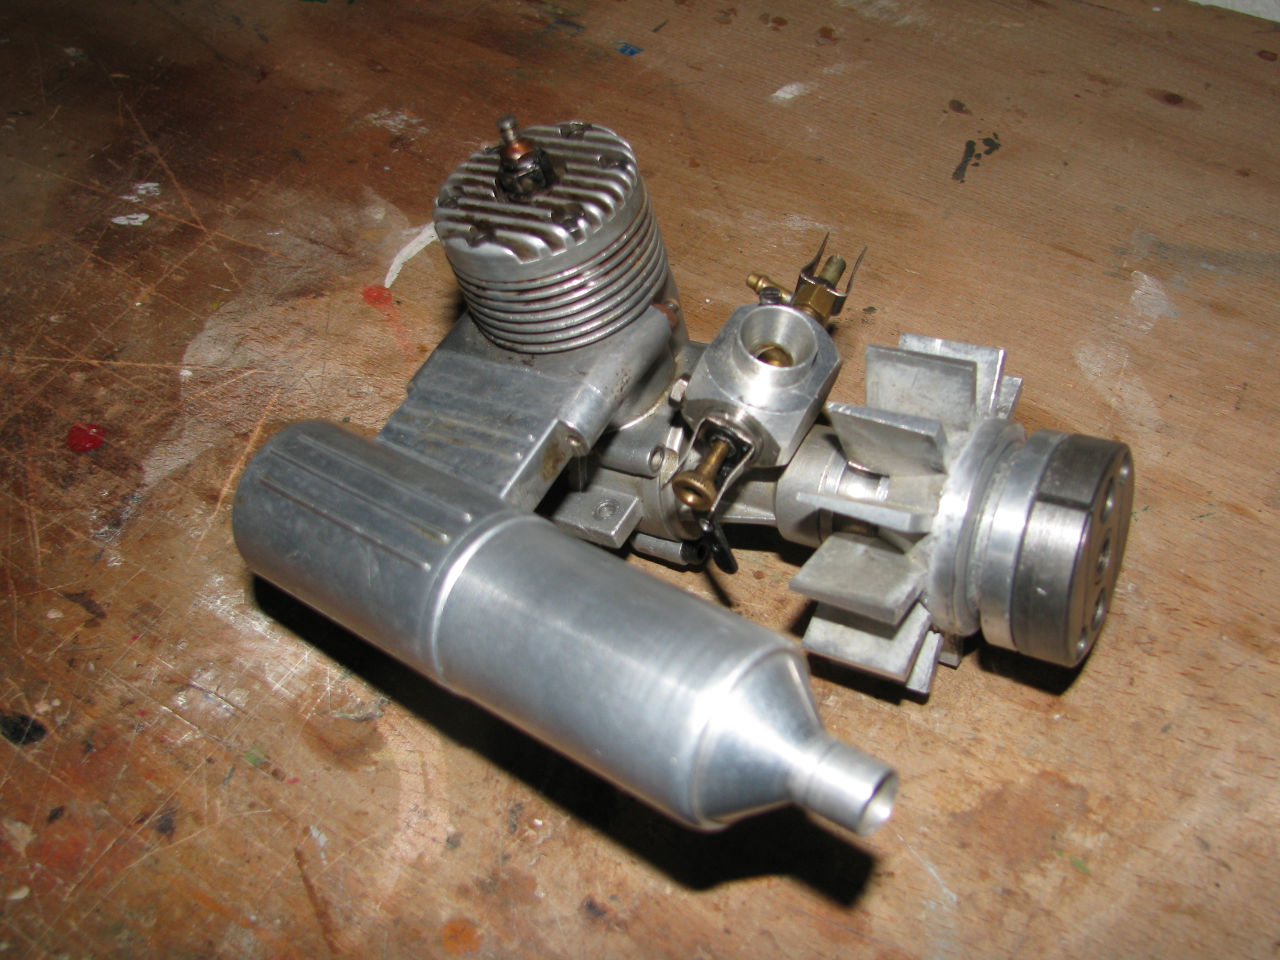 Kalt Huey Cobra 450 - Motor, Lüfter, Kupplung